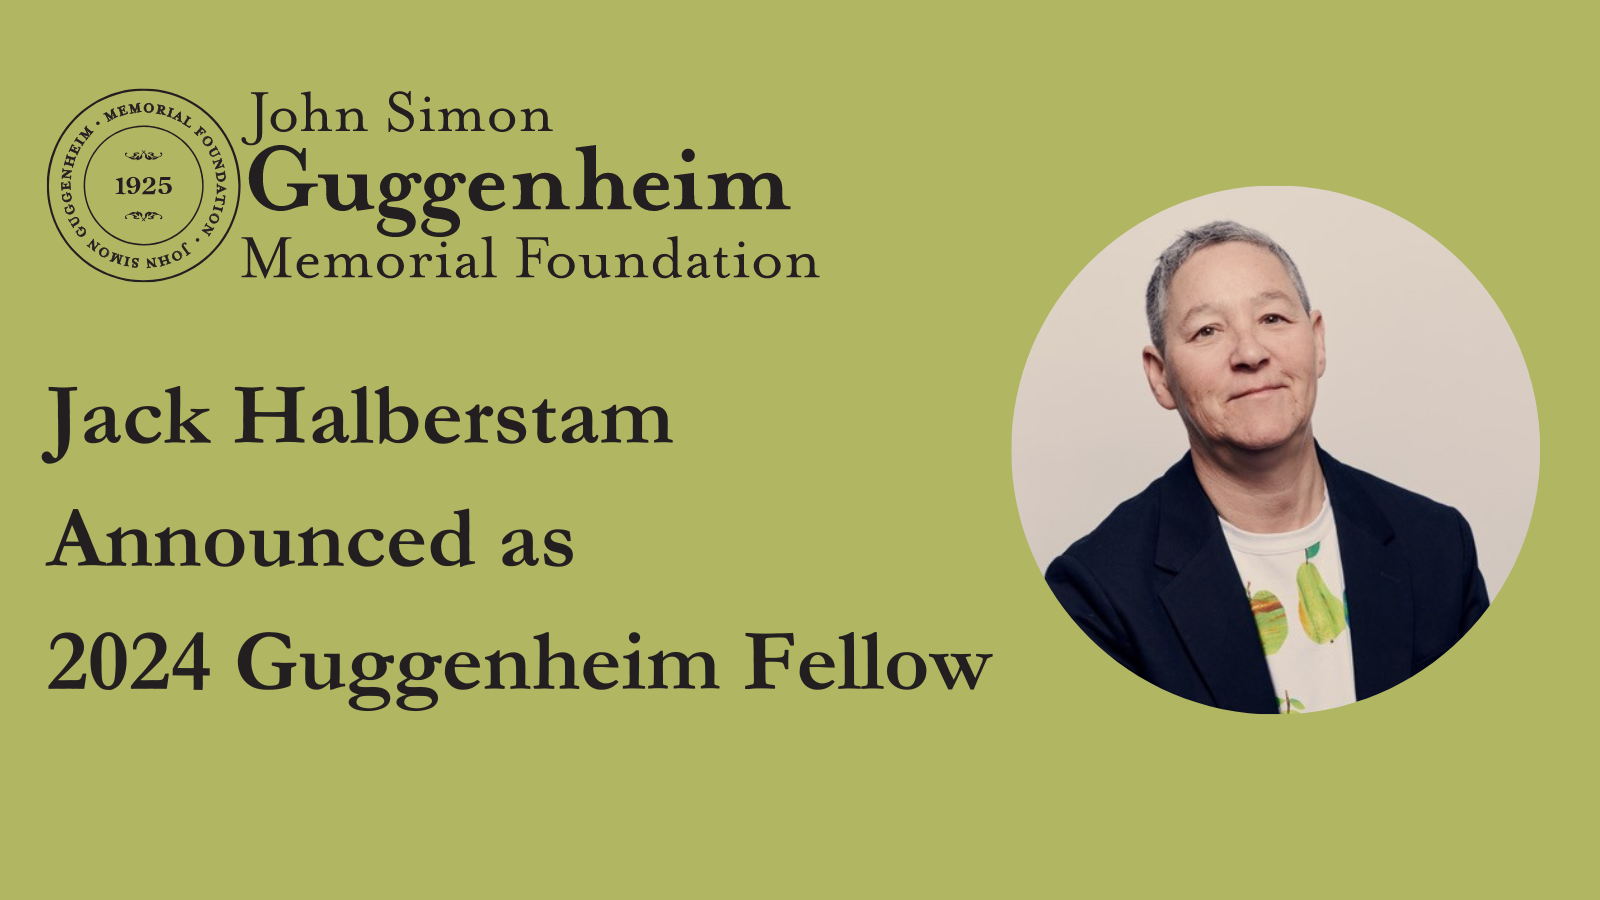 Image of Jack Halberstam with text that reads Jack Halberstam Announced as 2024 Guggenheim Fellow